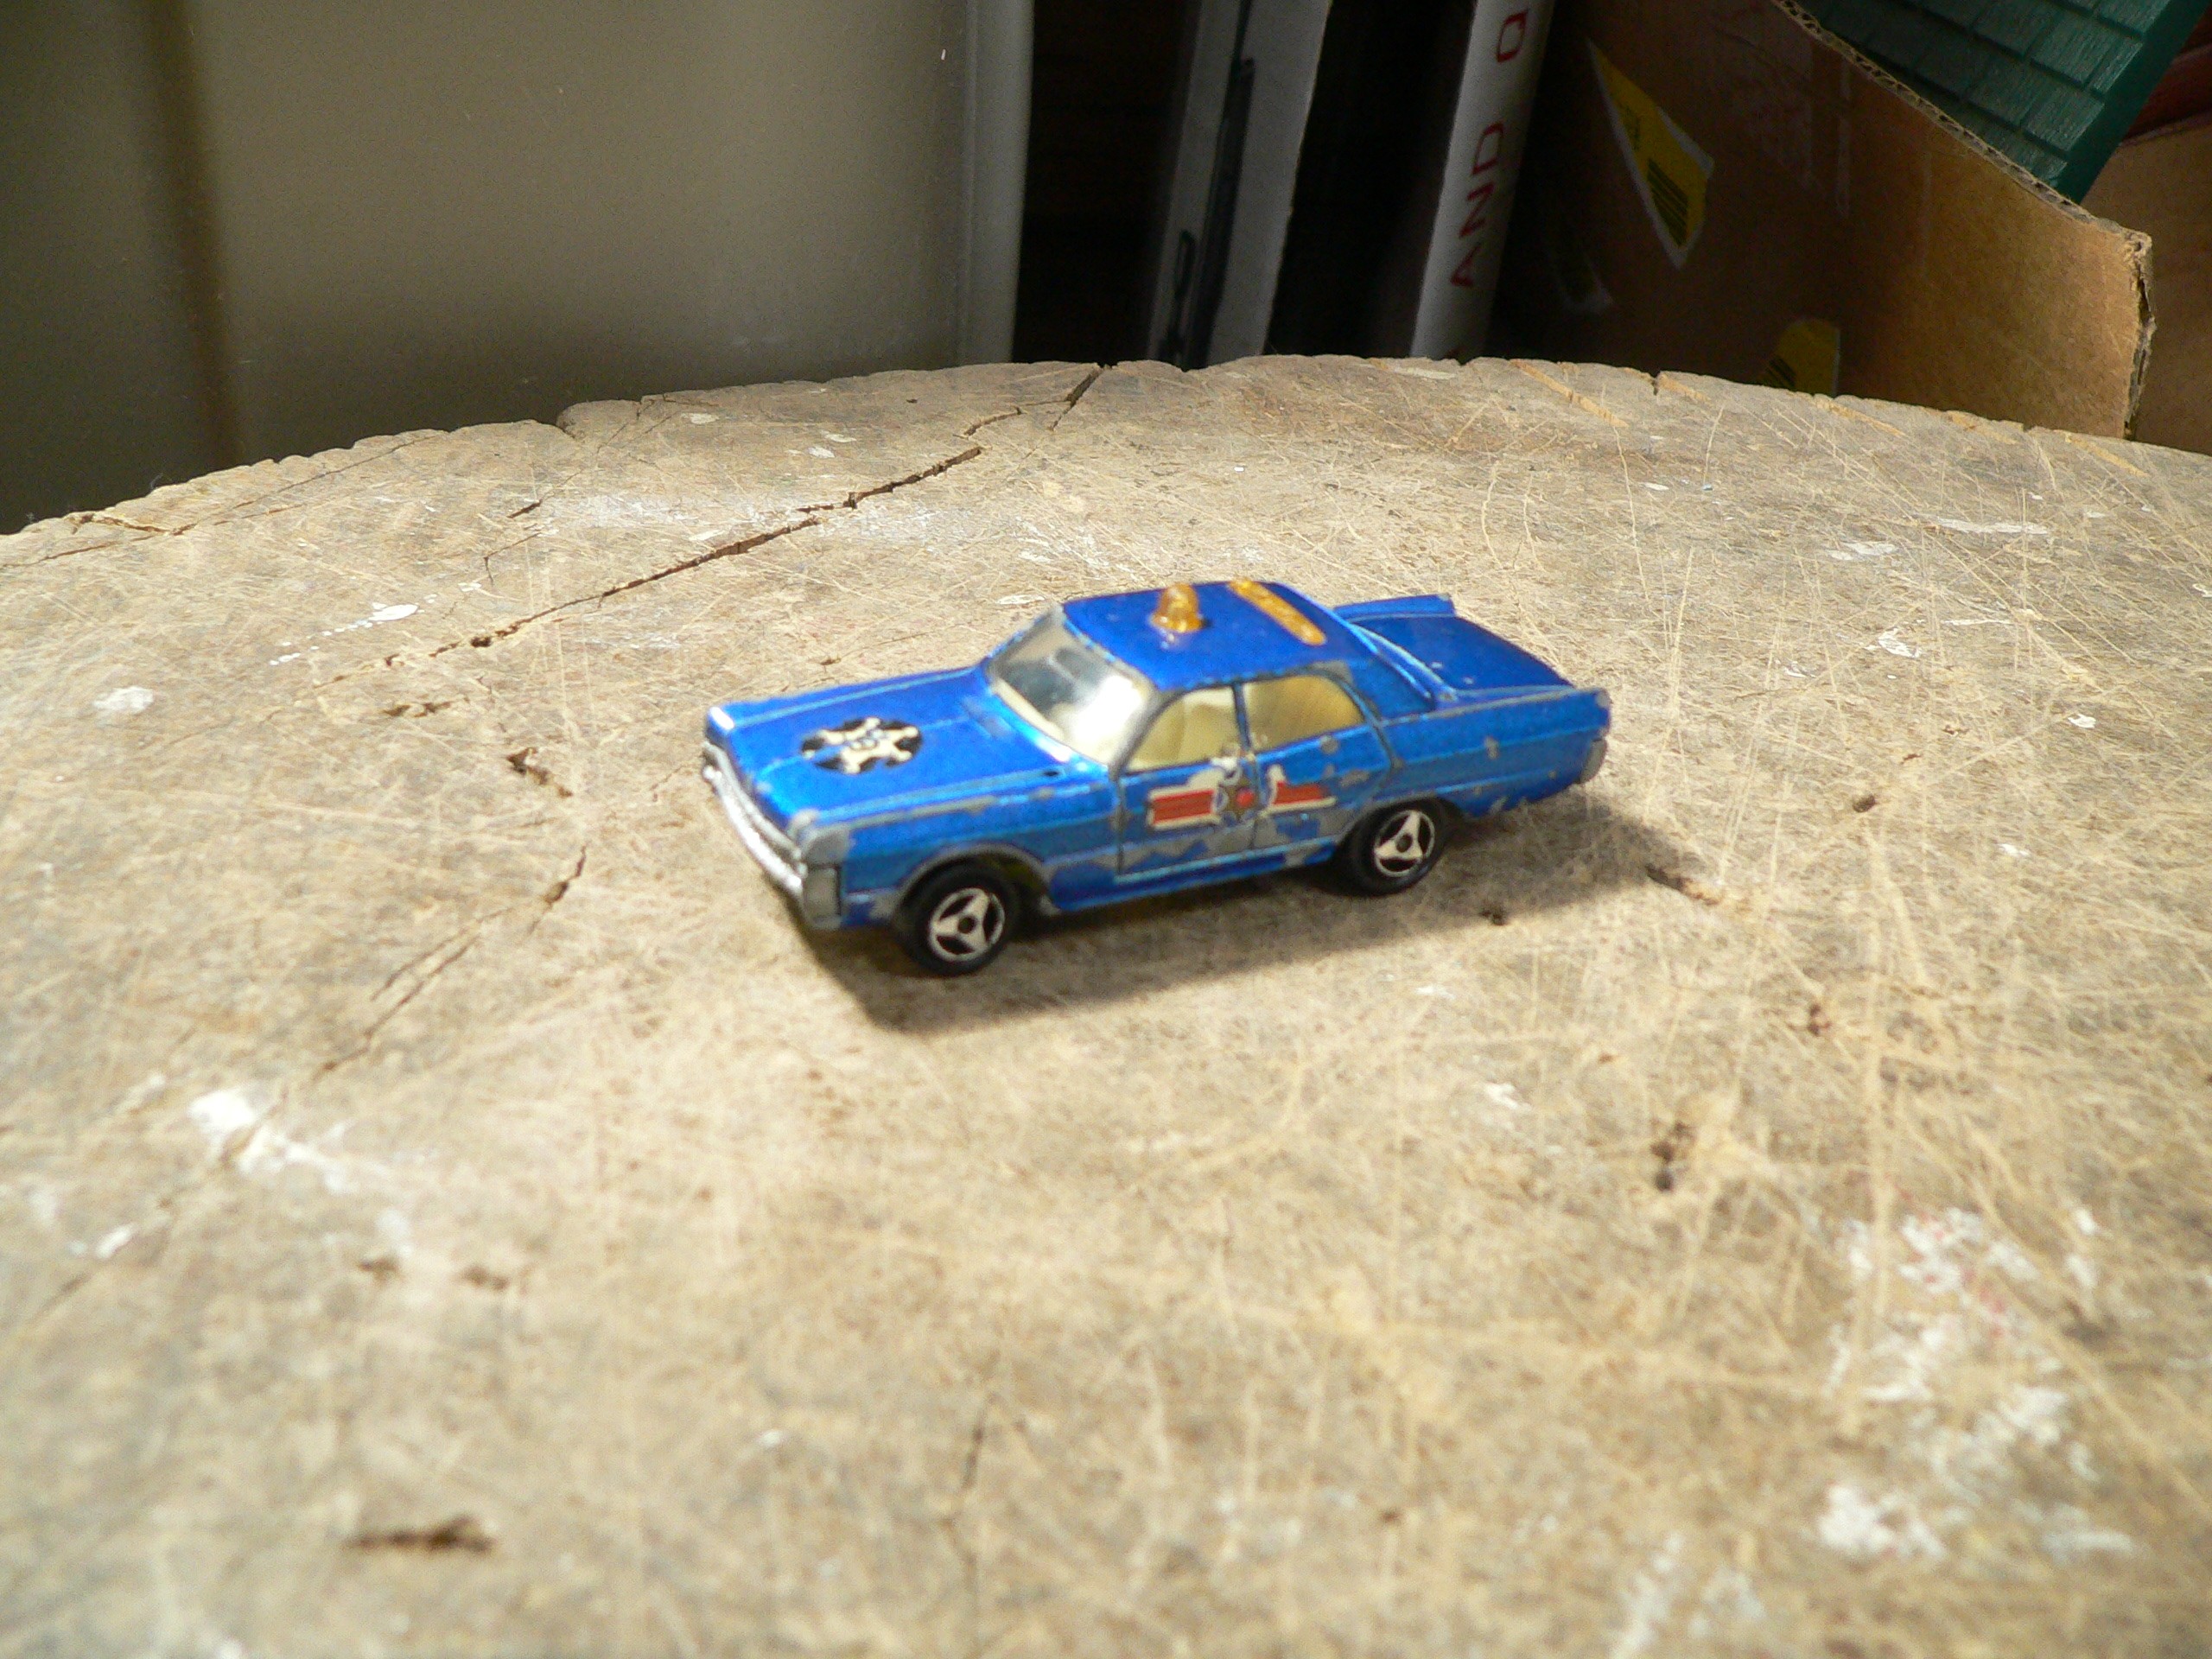 Plymouth bleu shériff # 9185.11